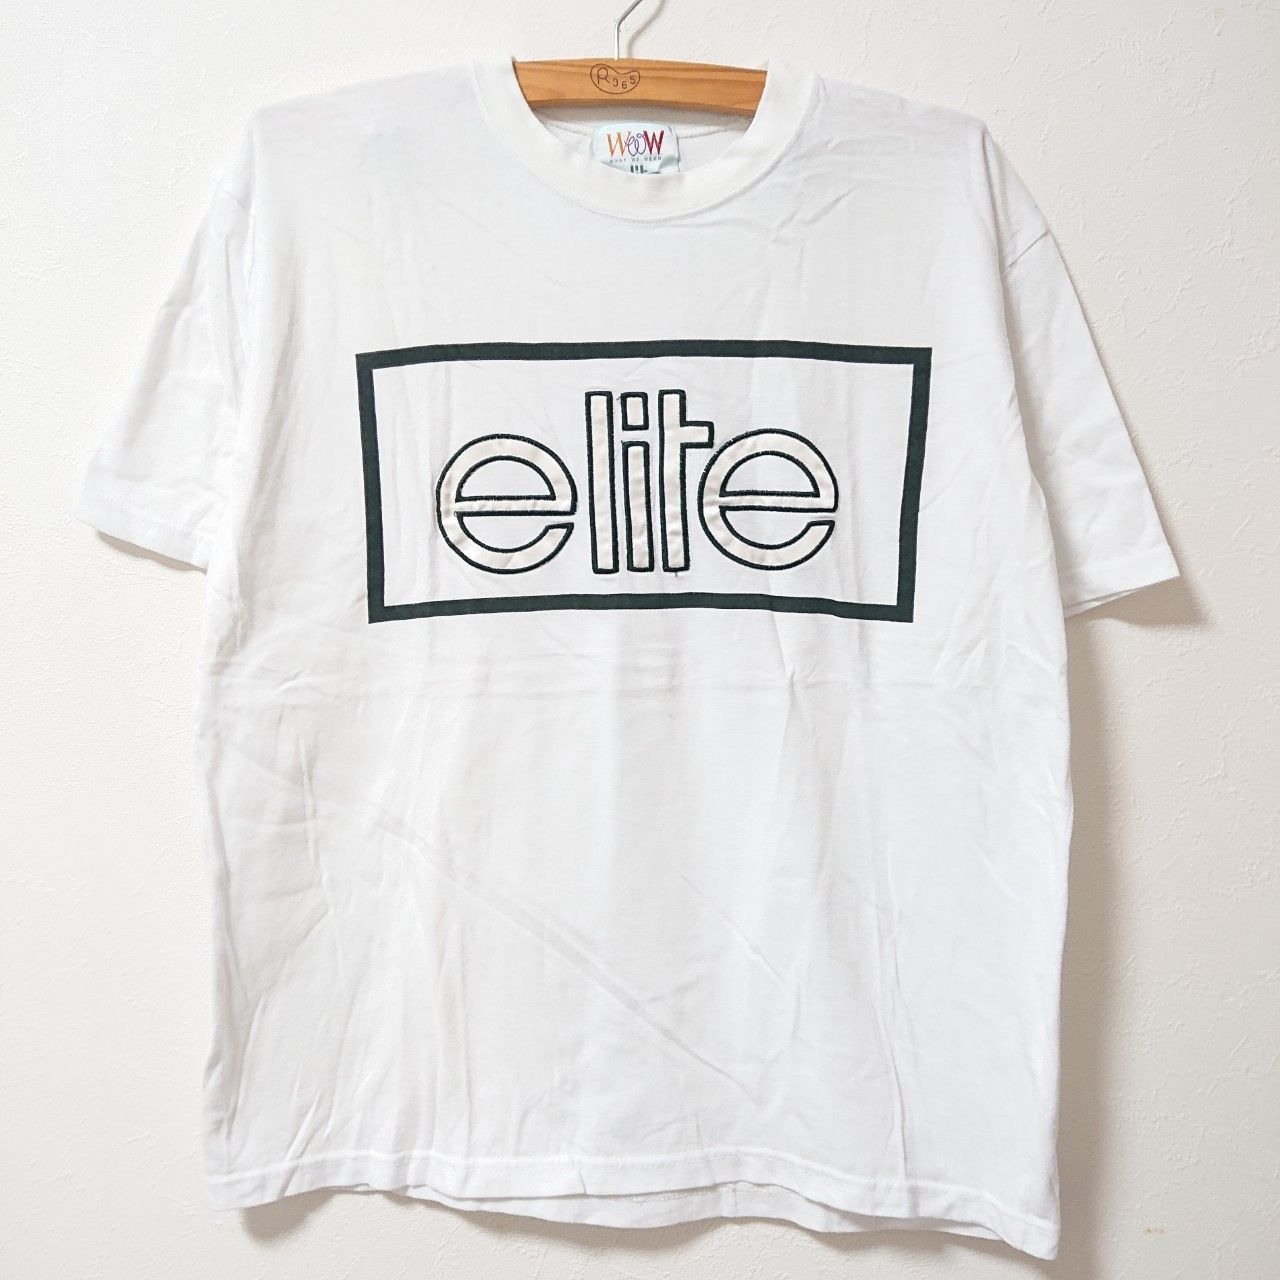 w^)b elite エリート 半袖 Tシャツ ブランドロゴ ロゴプリント